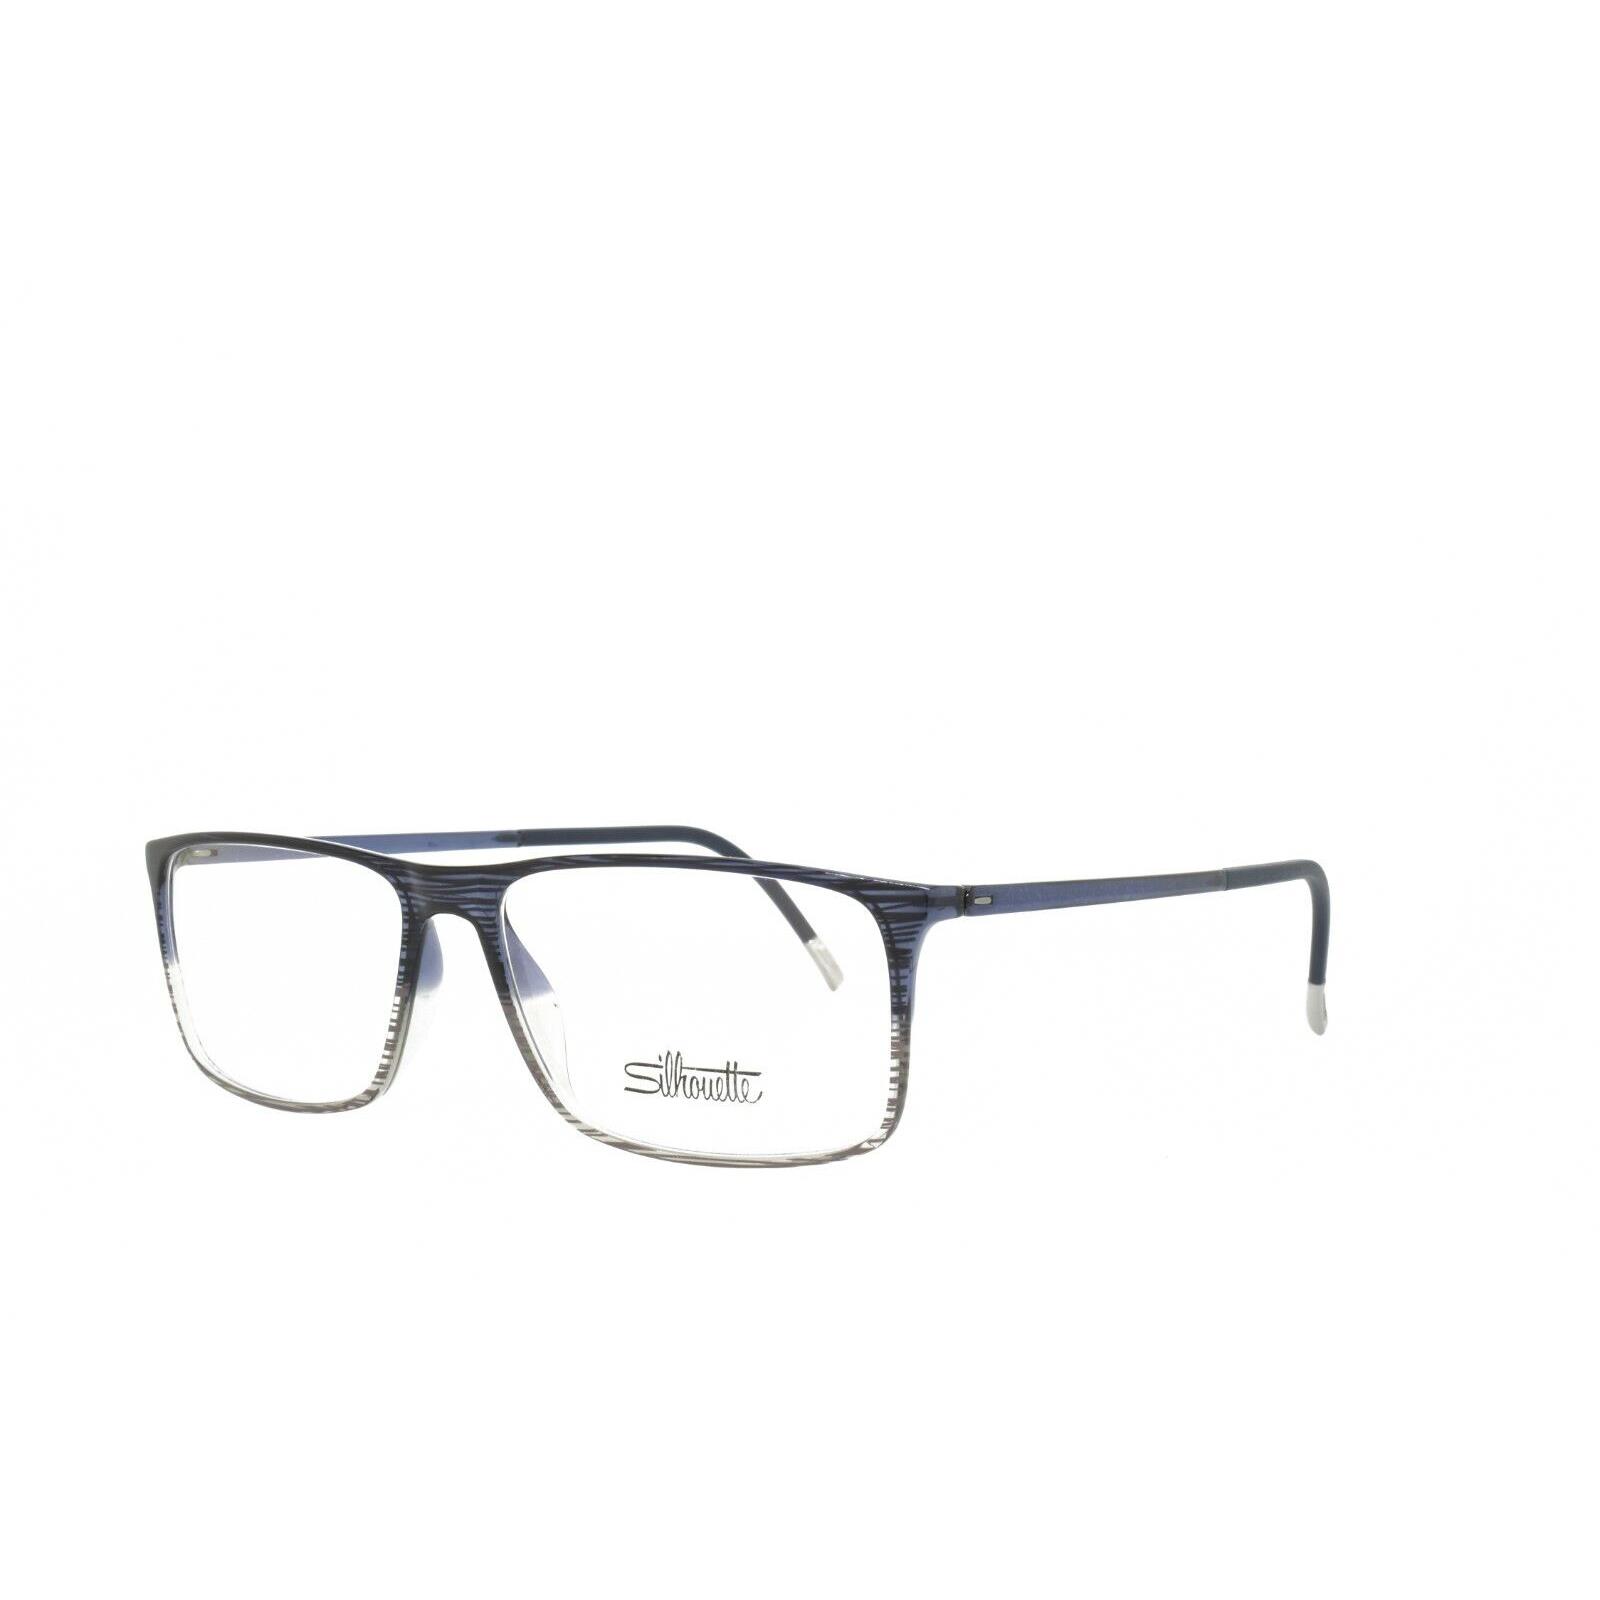 Silhouette Spx Illusion 2892 10 6053 Eyeglasses 56-15-145 Blue-grey ...